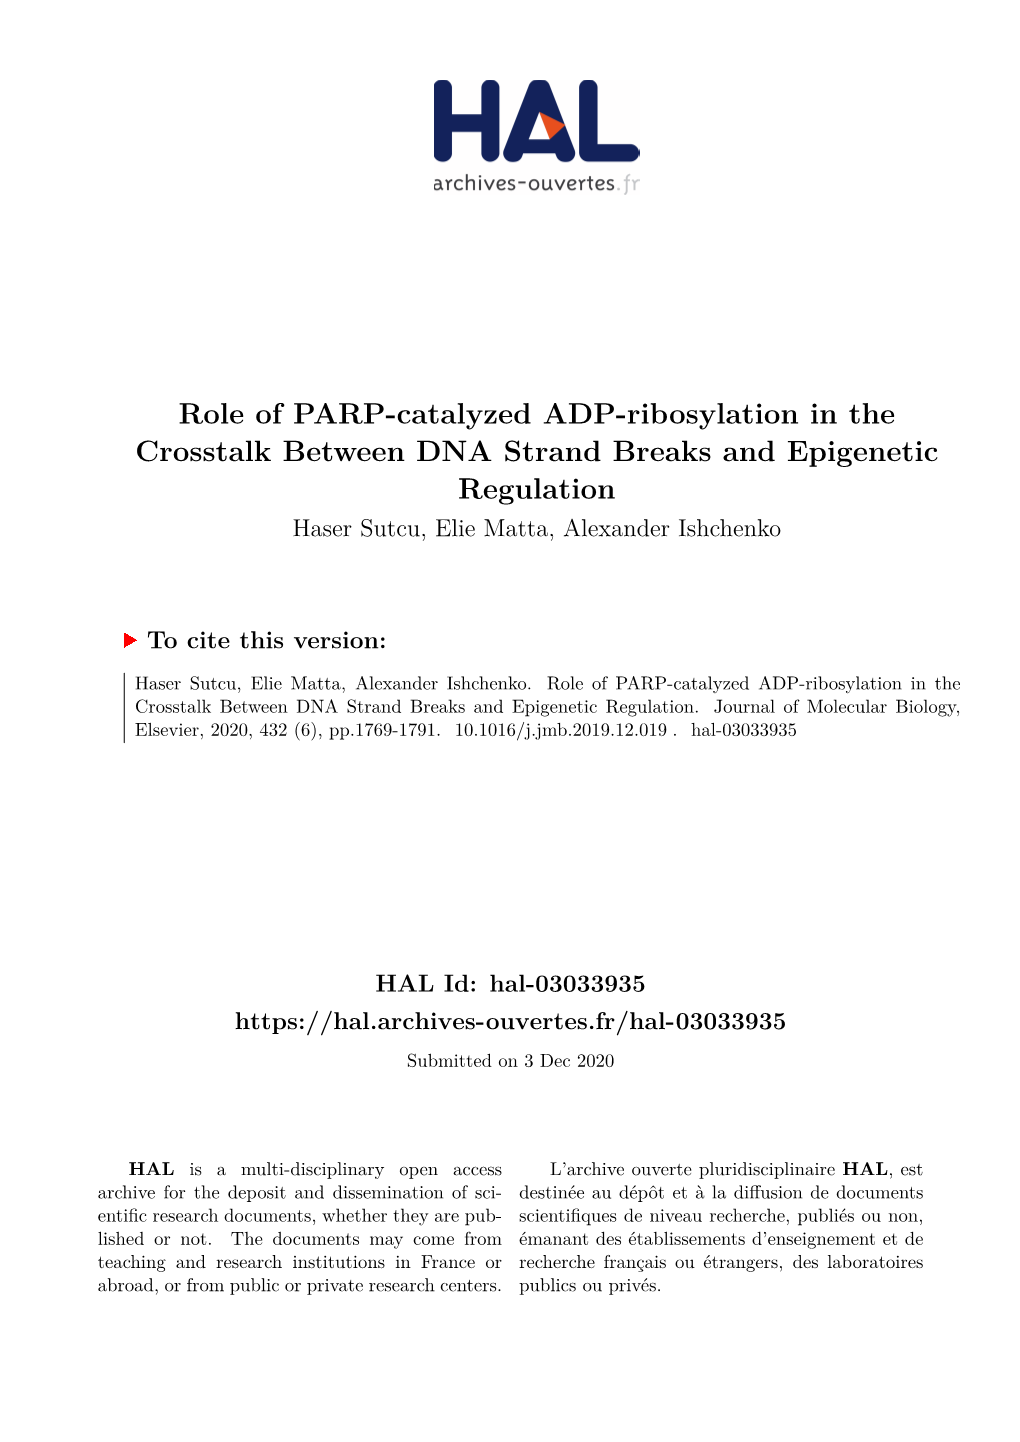 Role of PARP-Catalyzed ADP-Ribosylation in the Crosstalk Between DNA Strand Breaks and Epigenetic Regulation Haser Sutcu, Elie Matta, Alexander Ishchenko